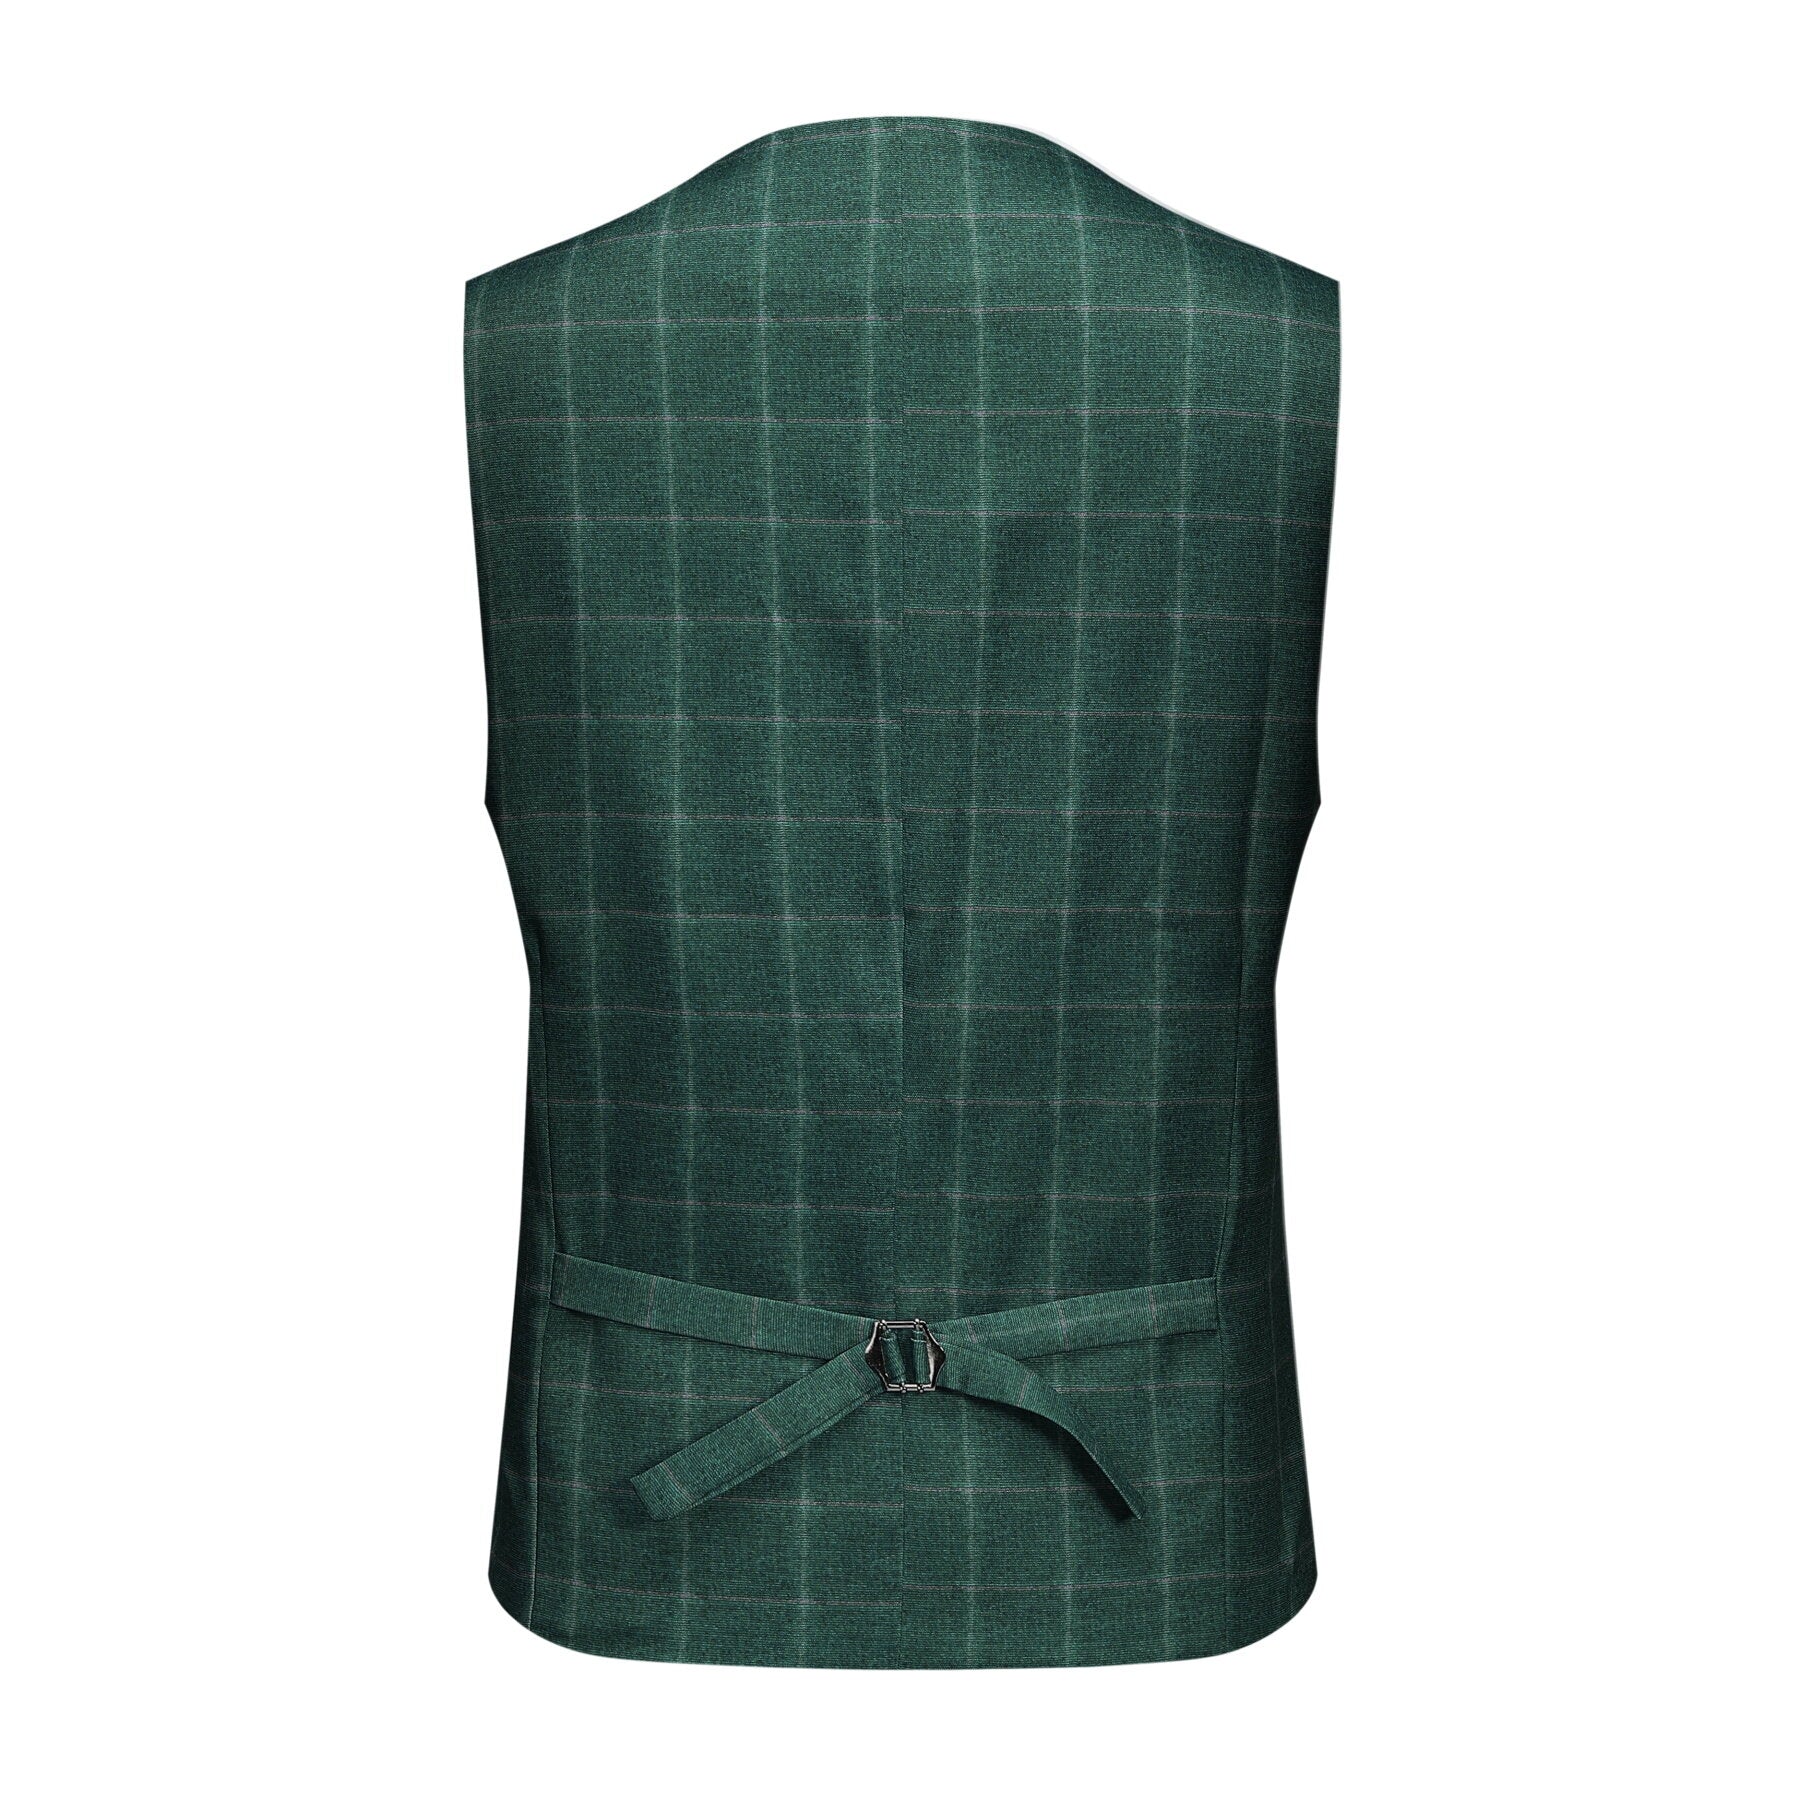 3-Piece Slim Fit Green Plaid Modern Suit